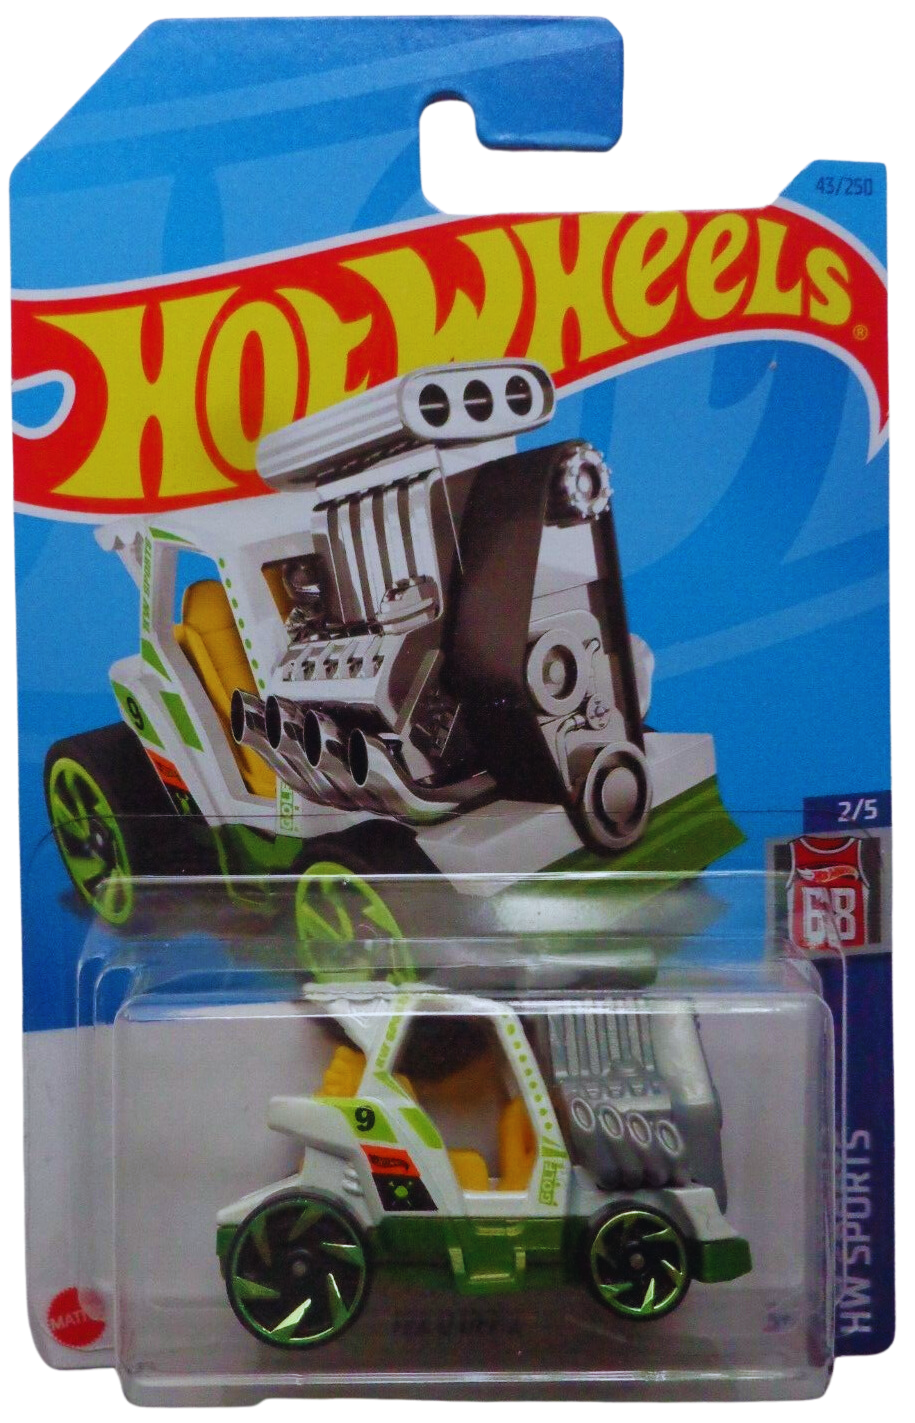 2023 Hot Wheels HW SPORTS 3/5 Tee'd Off 2 43/250 (White)